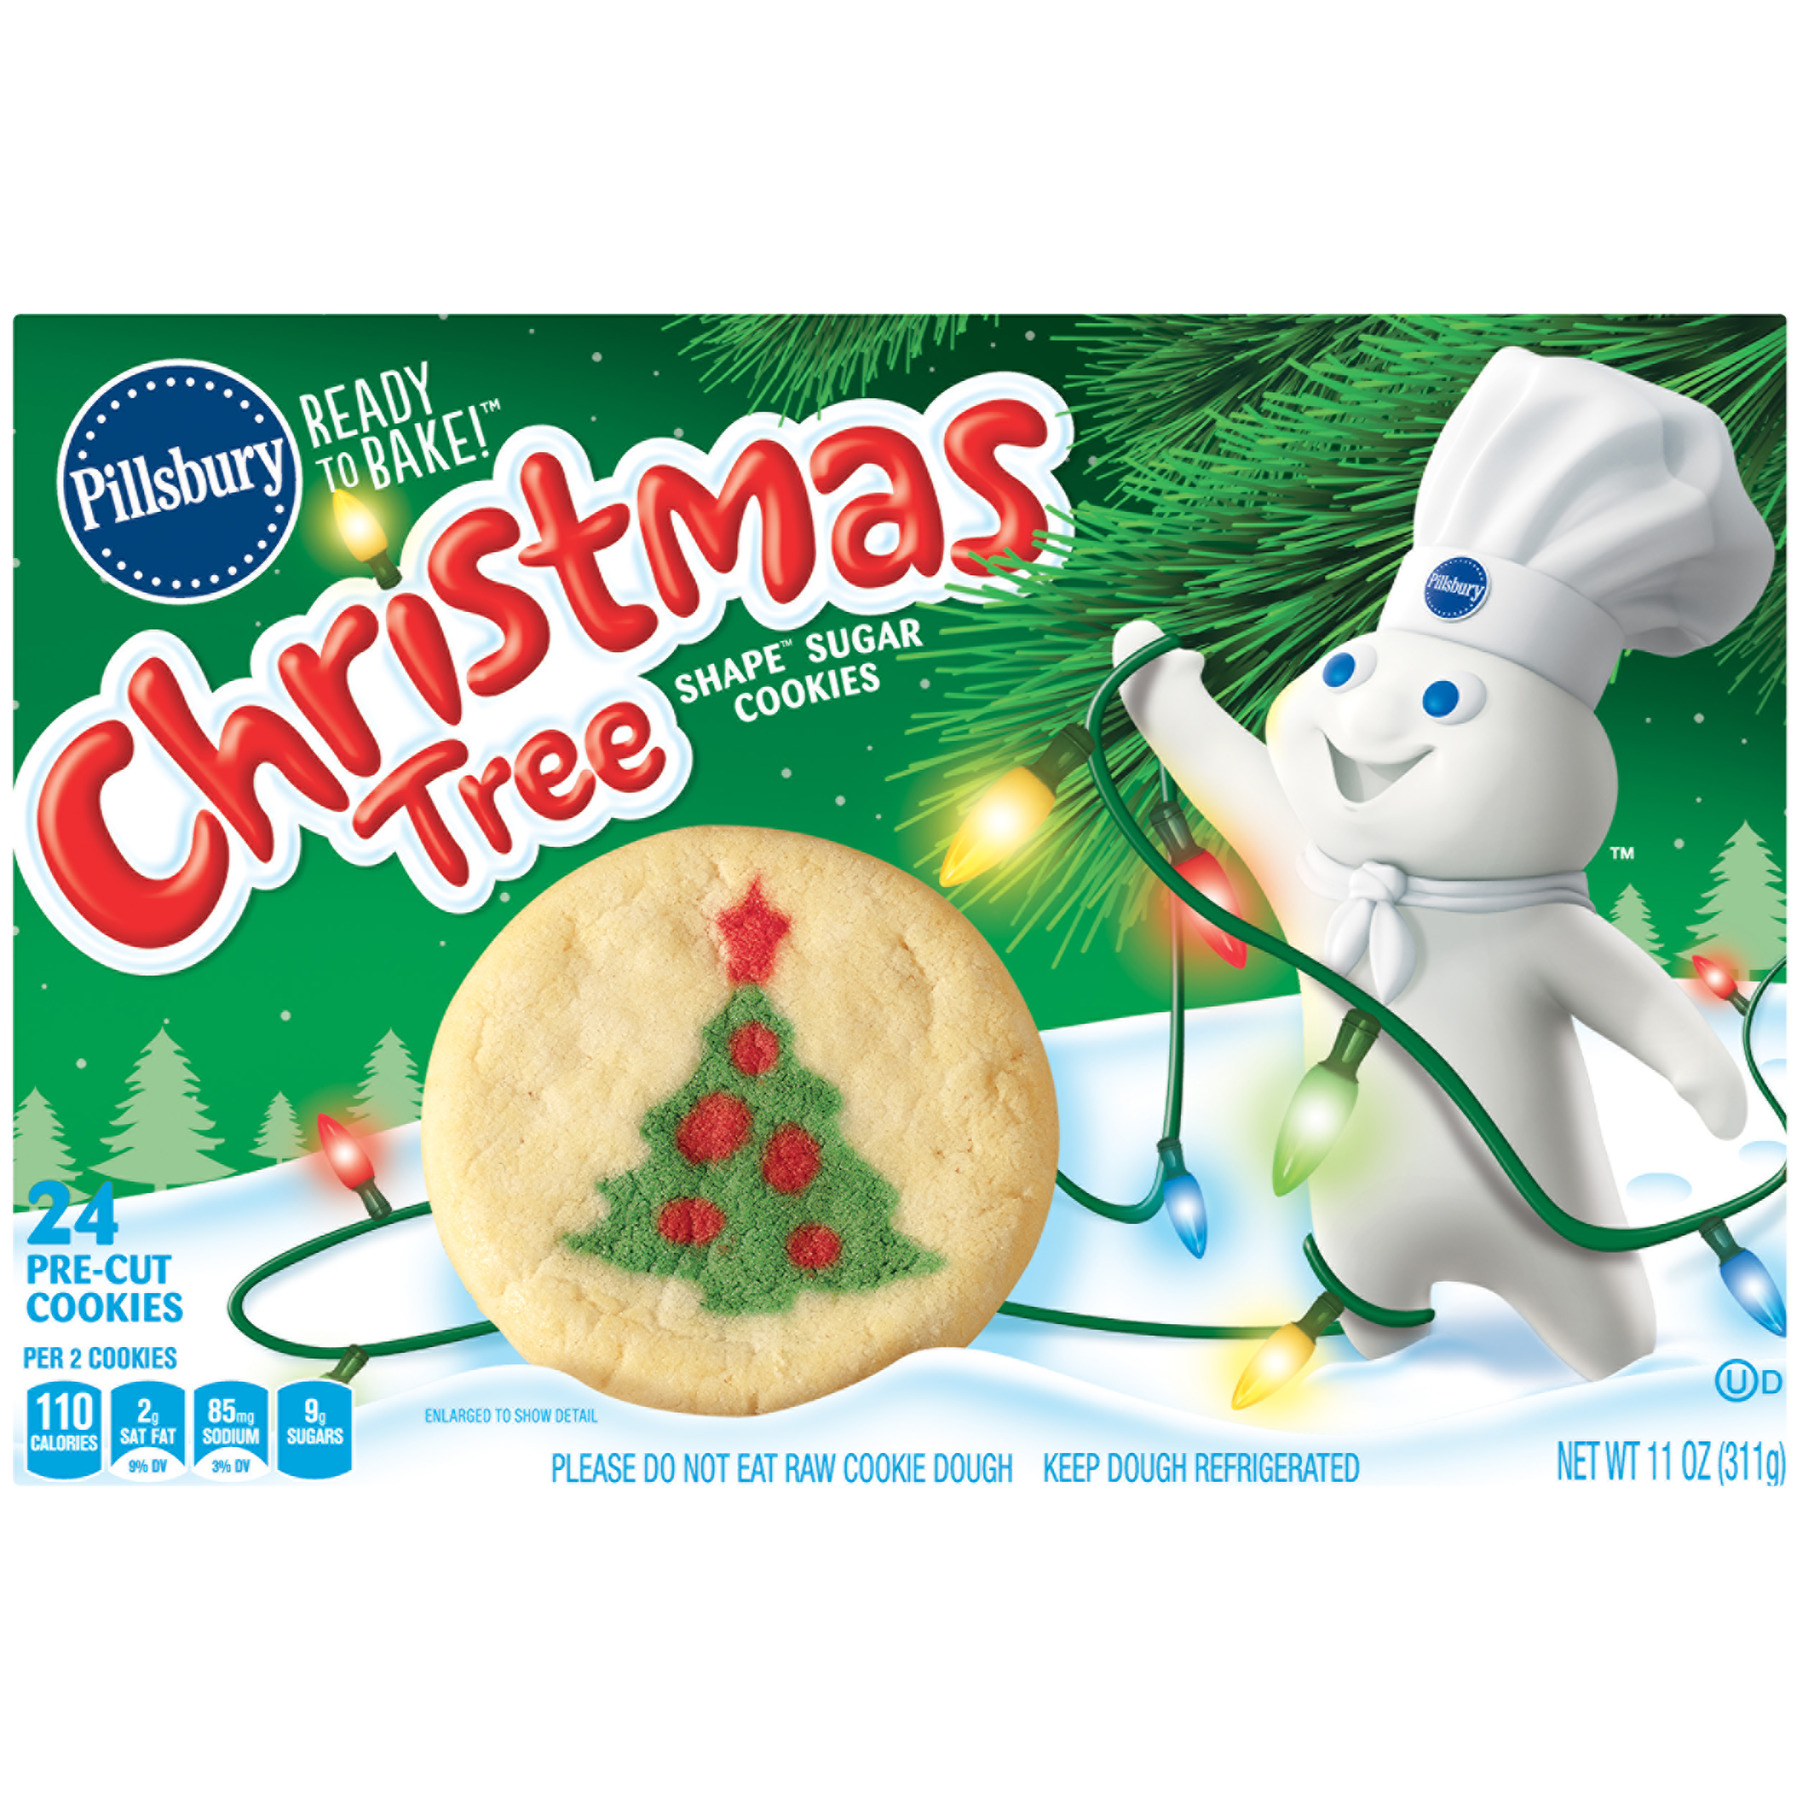 Pillsbury Ready to Bake! Christmas Tree Shape Sugar Cookies